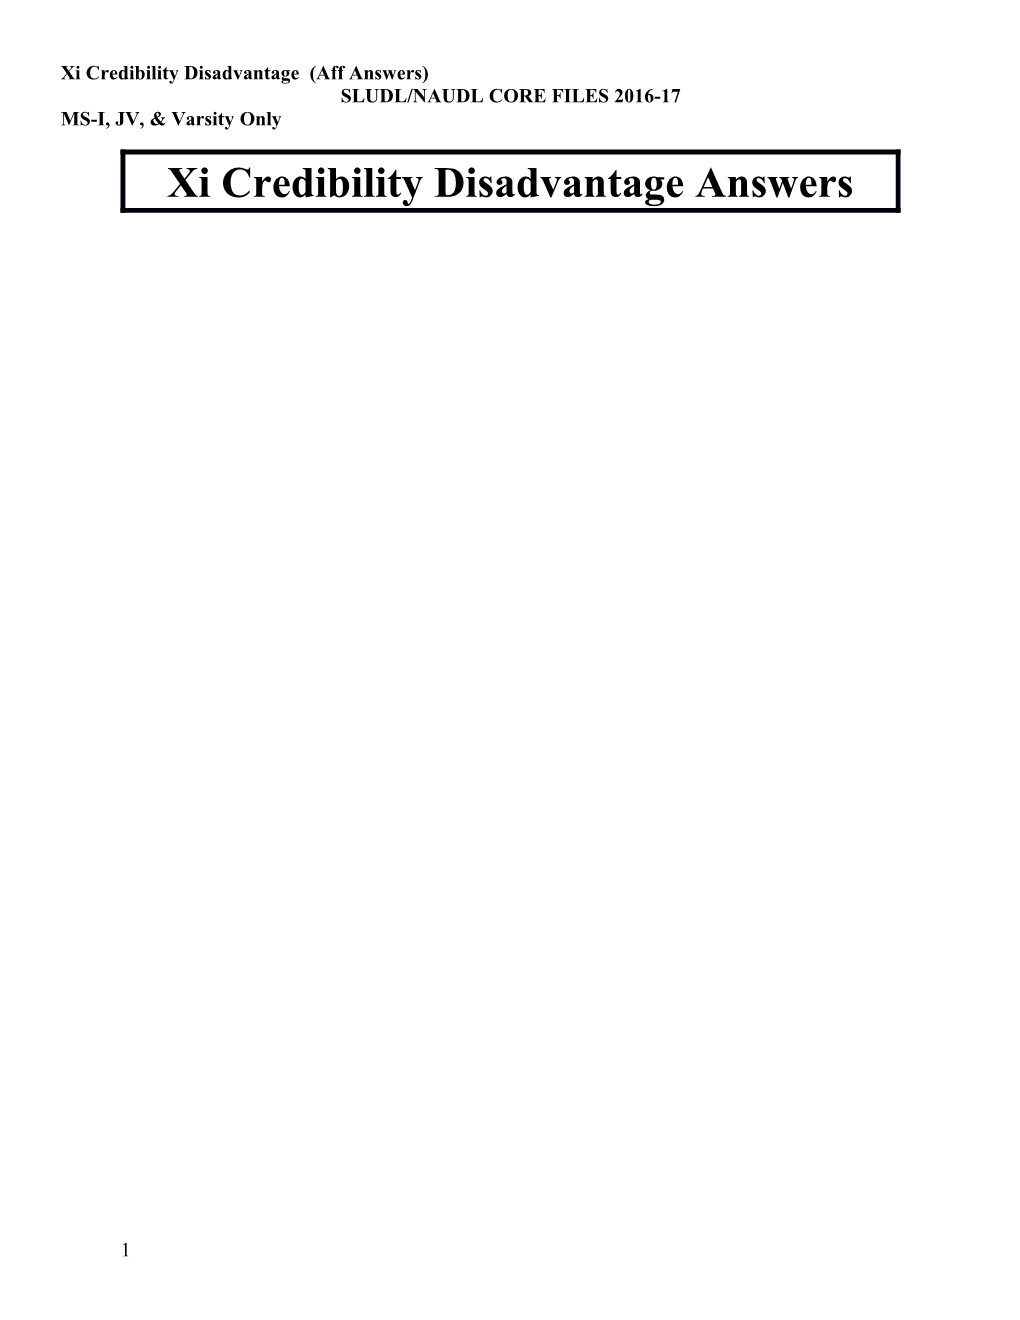 Xi Credibility Disadvantage (Aff Answers)SLUDL/NAUDL CORE FILES 2016-17